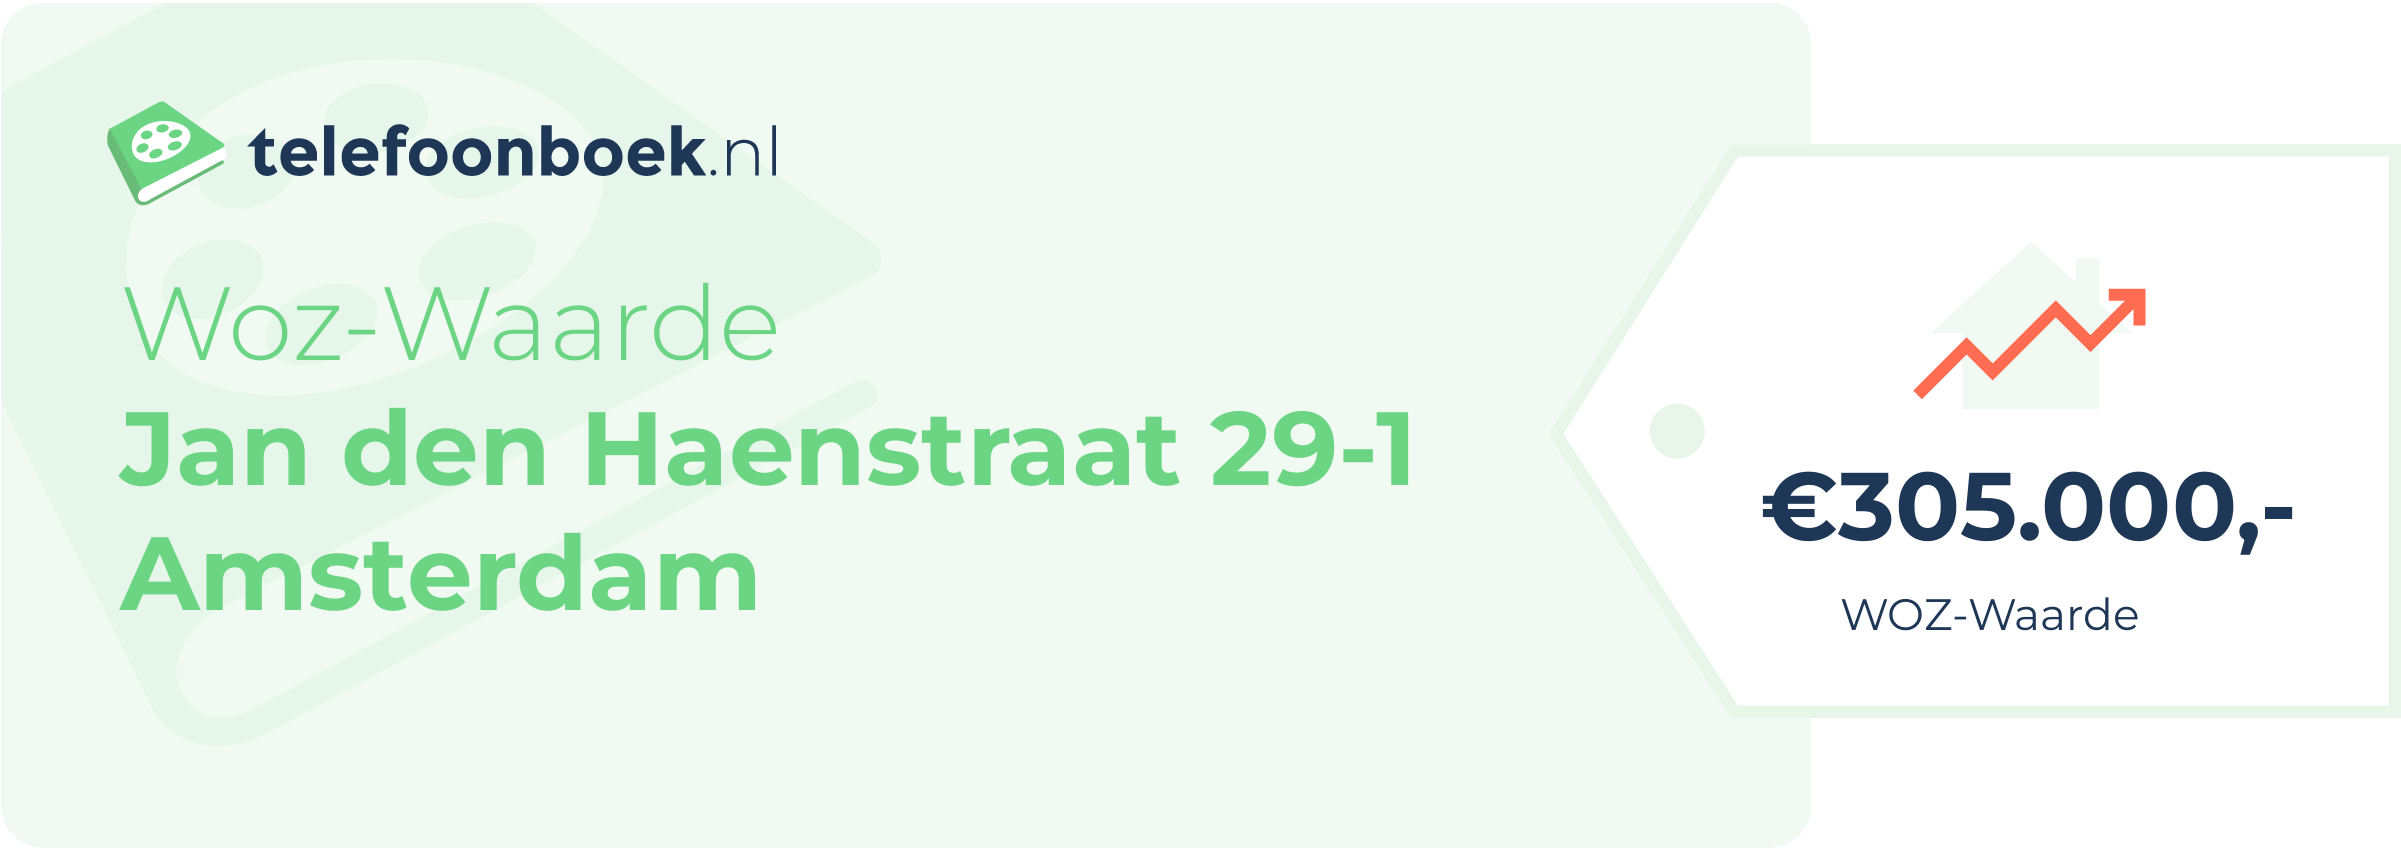 WOZ-waarde Jan Den Haenstraat 29-1 Amsterdam